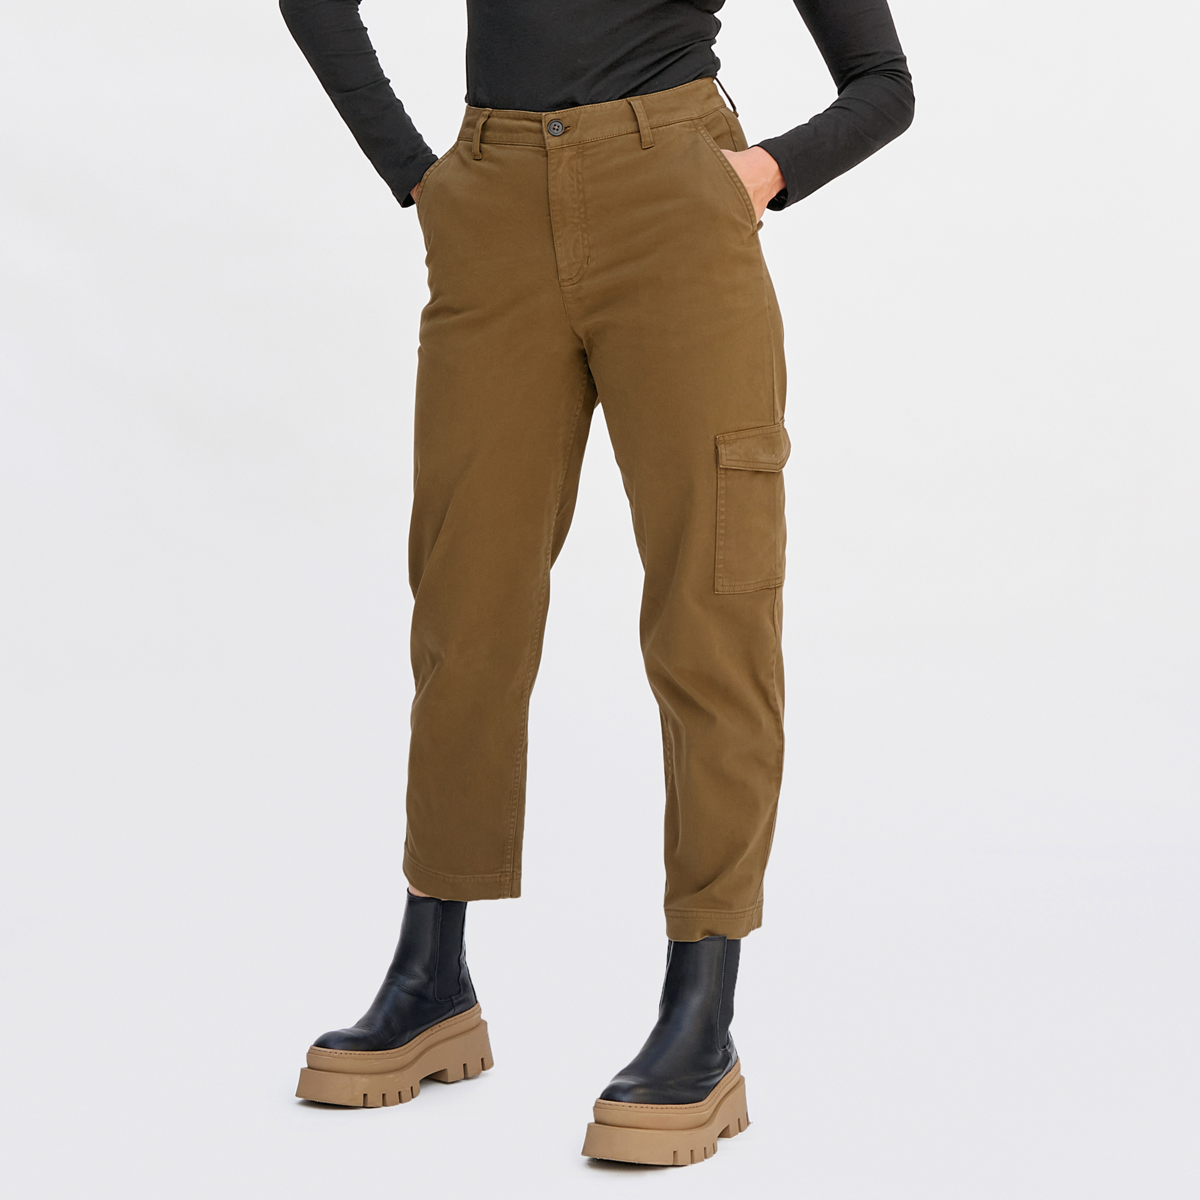 Brown Women Trousers